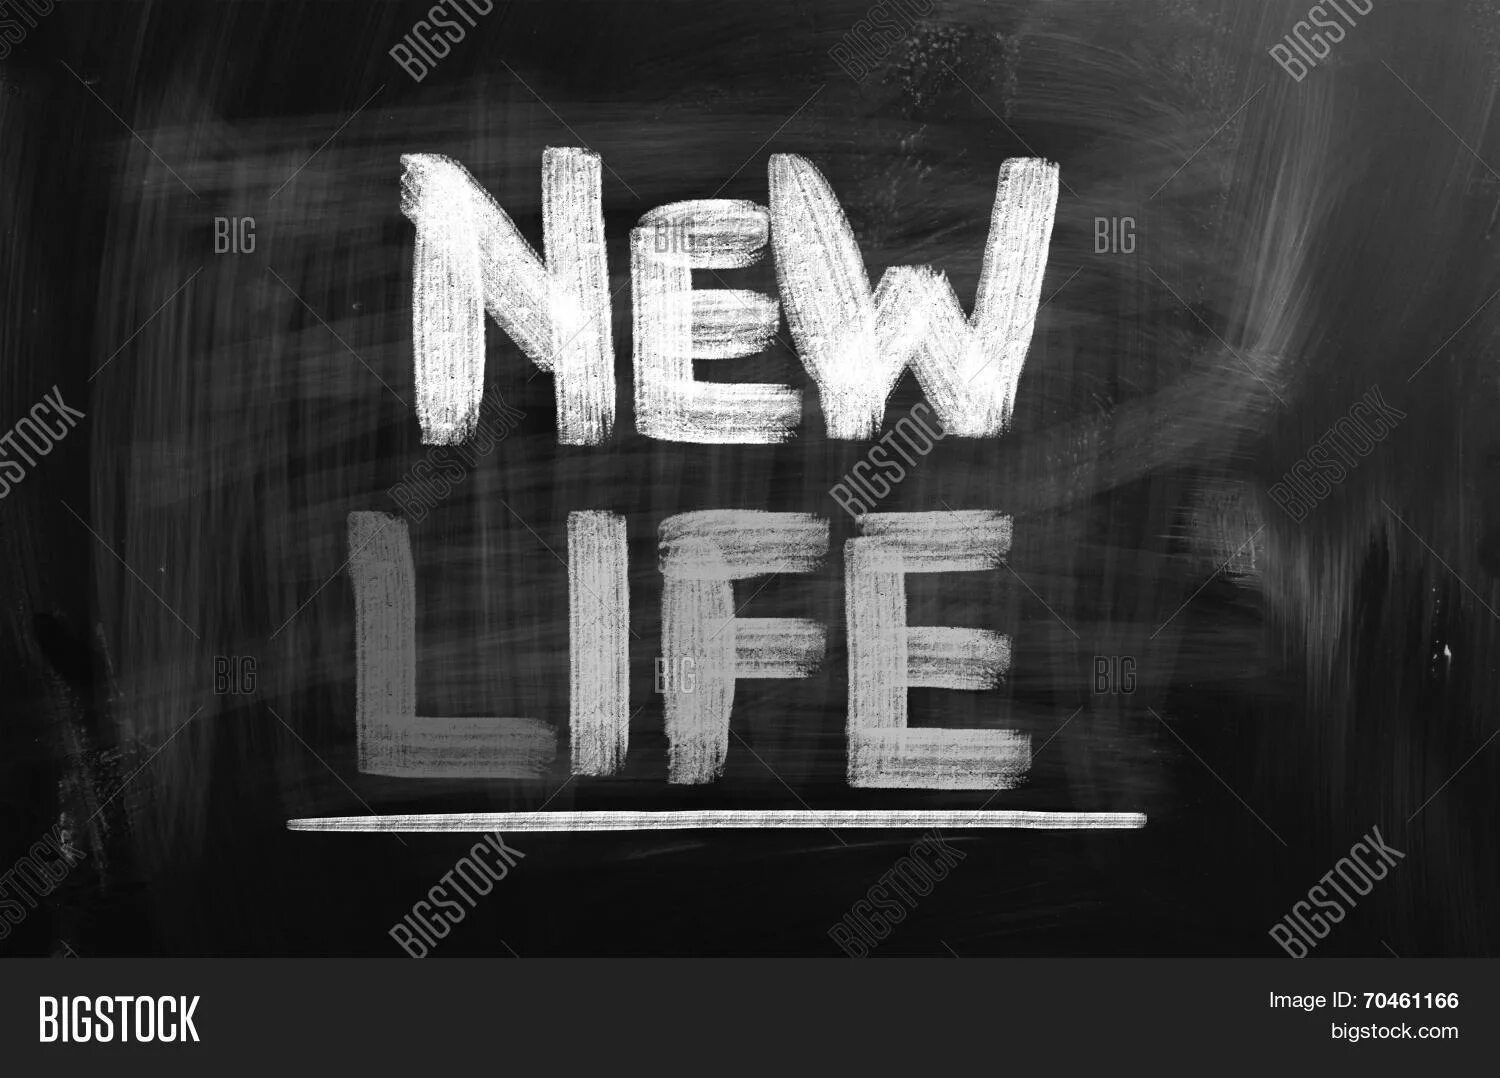 The New Life. Картинки лайф Нью. Happy New Life картинки. Надписью New Life фото. New life фф